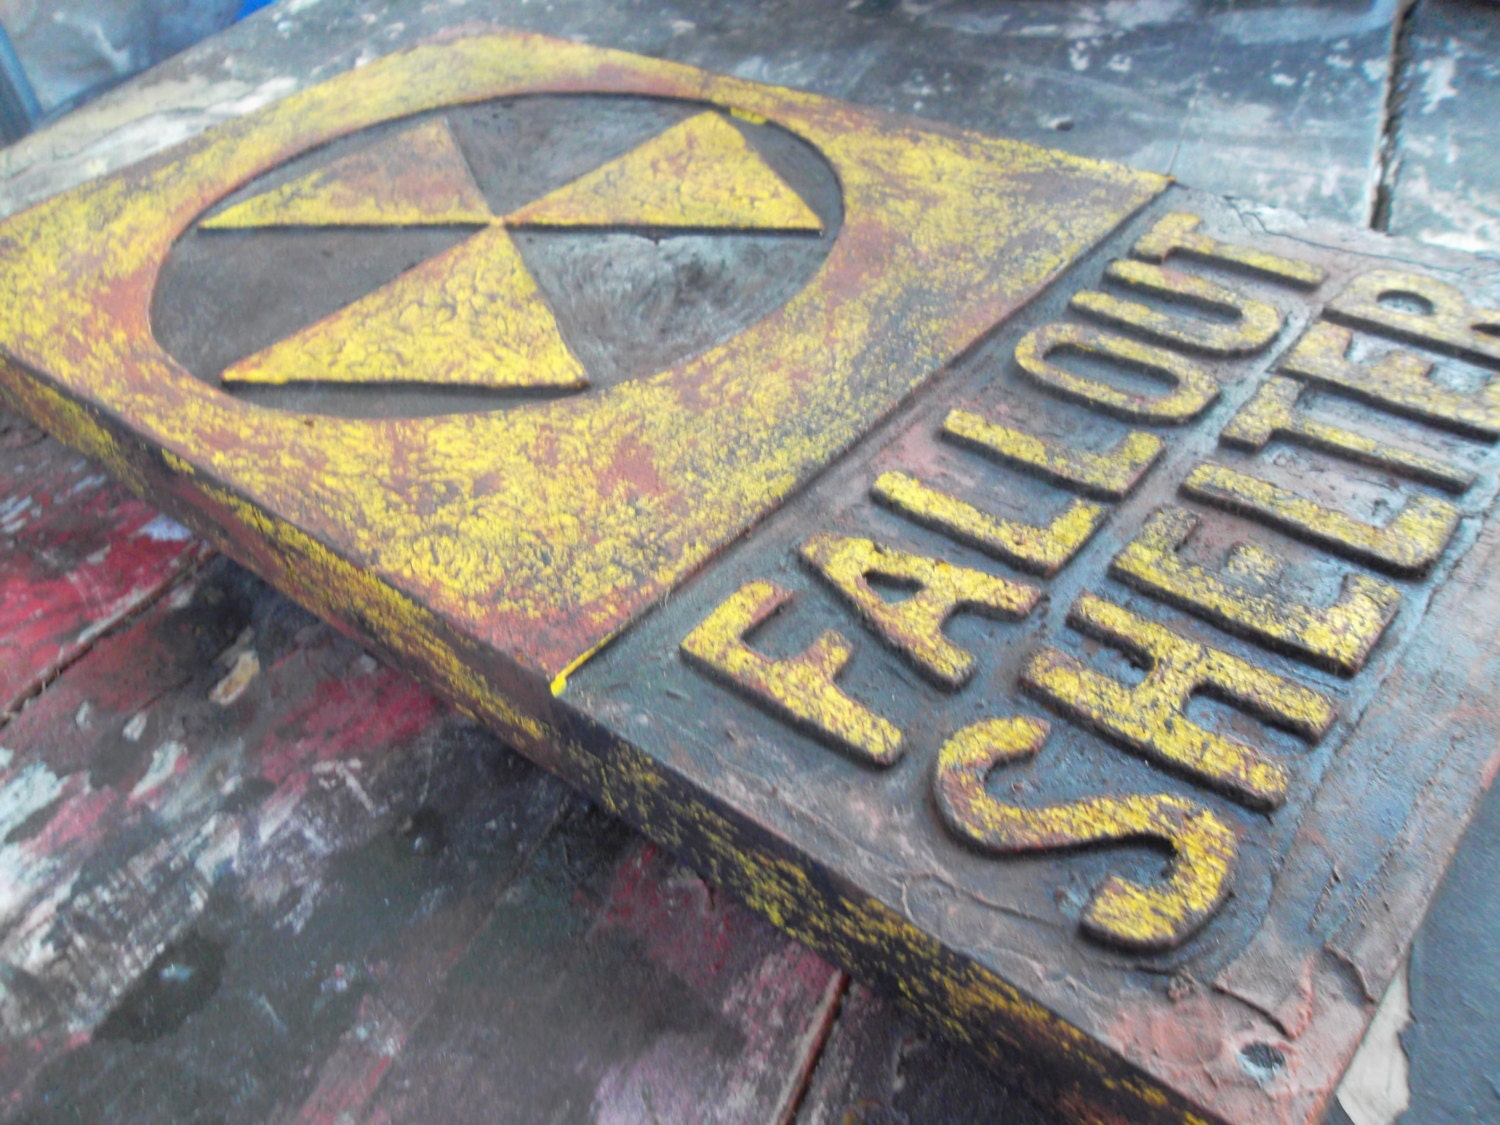 radioactive sign fallout shelter sign